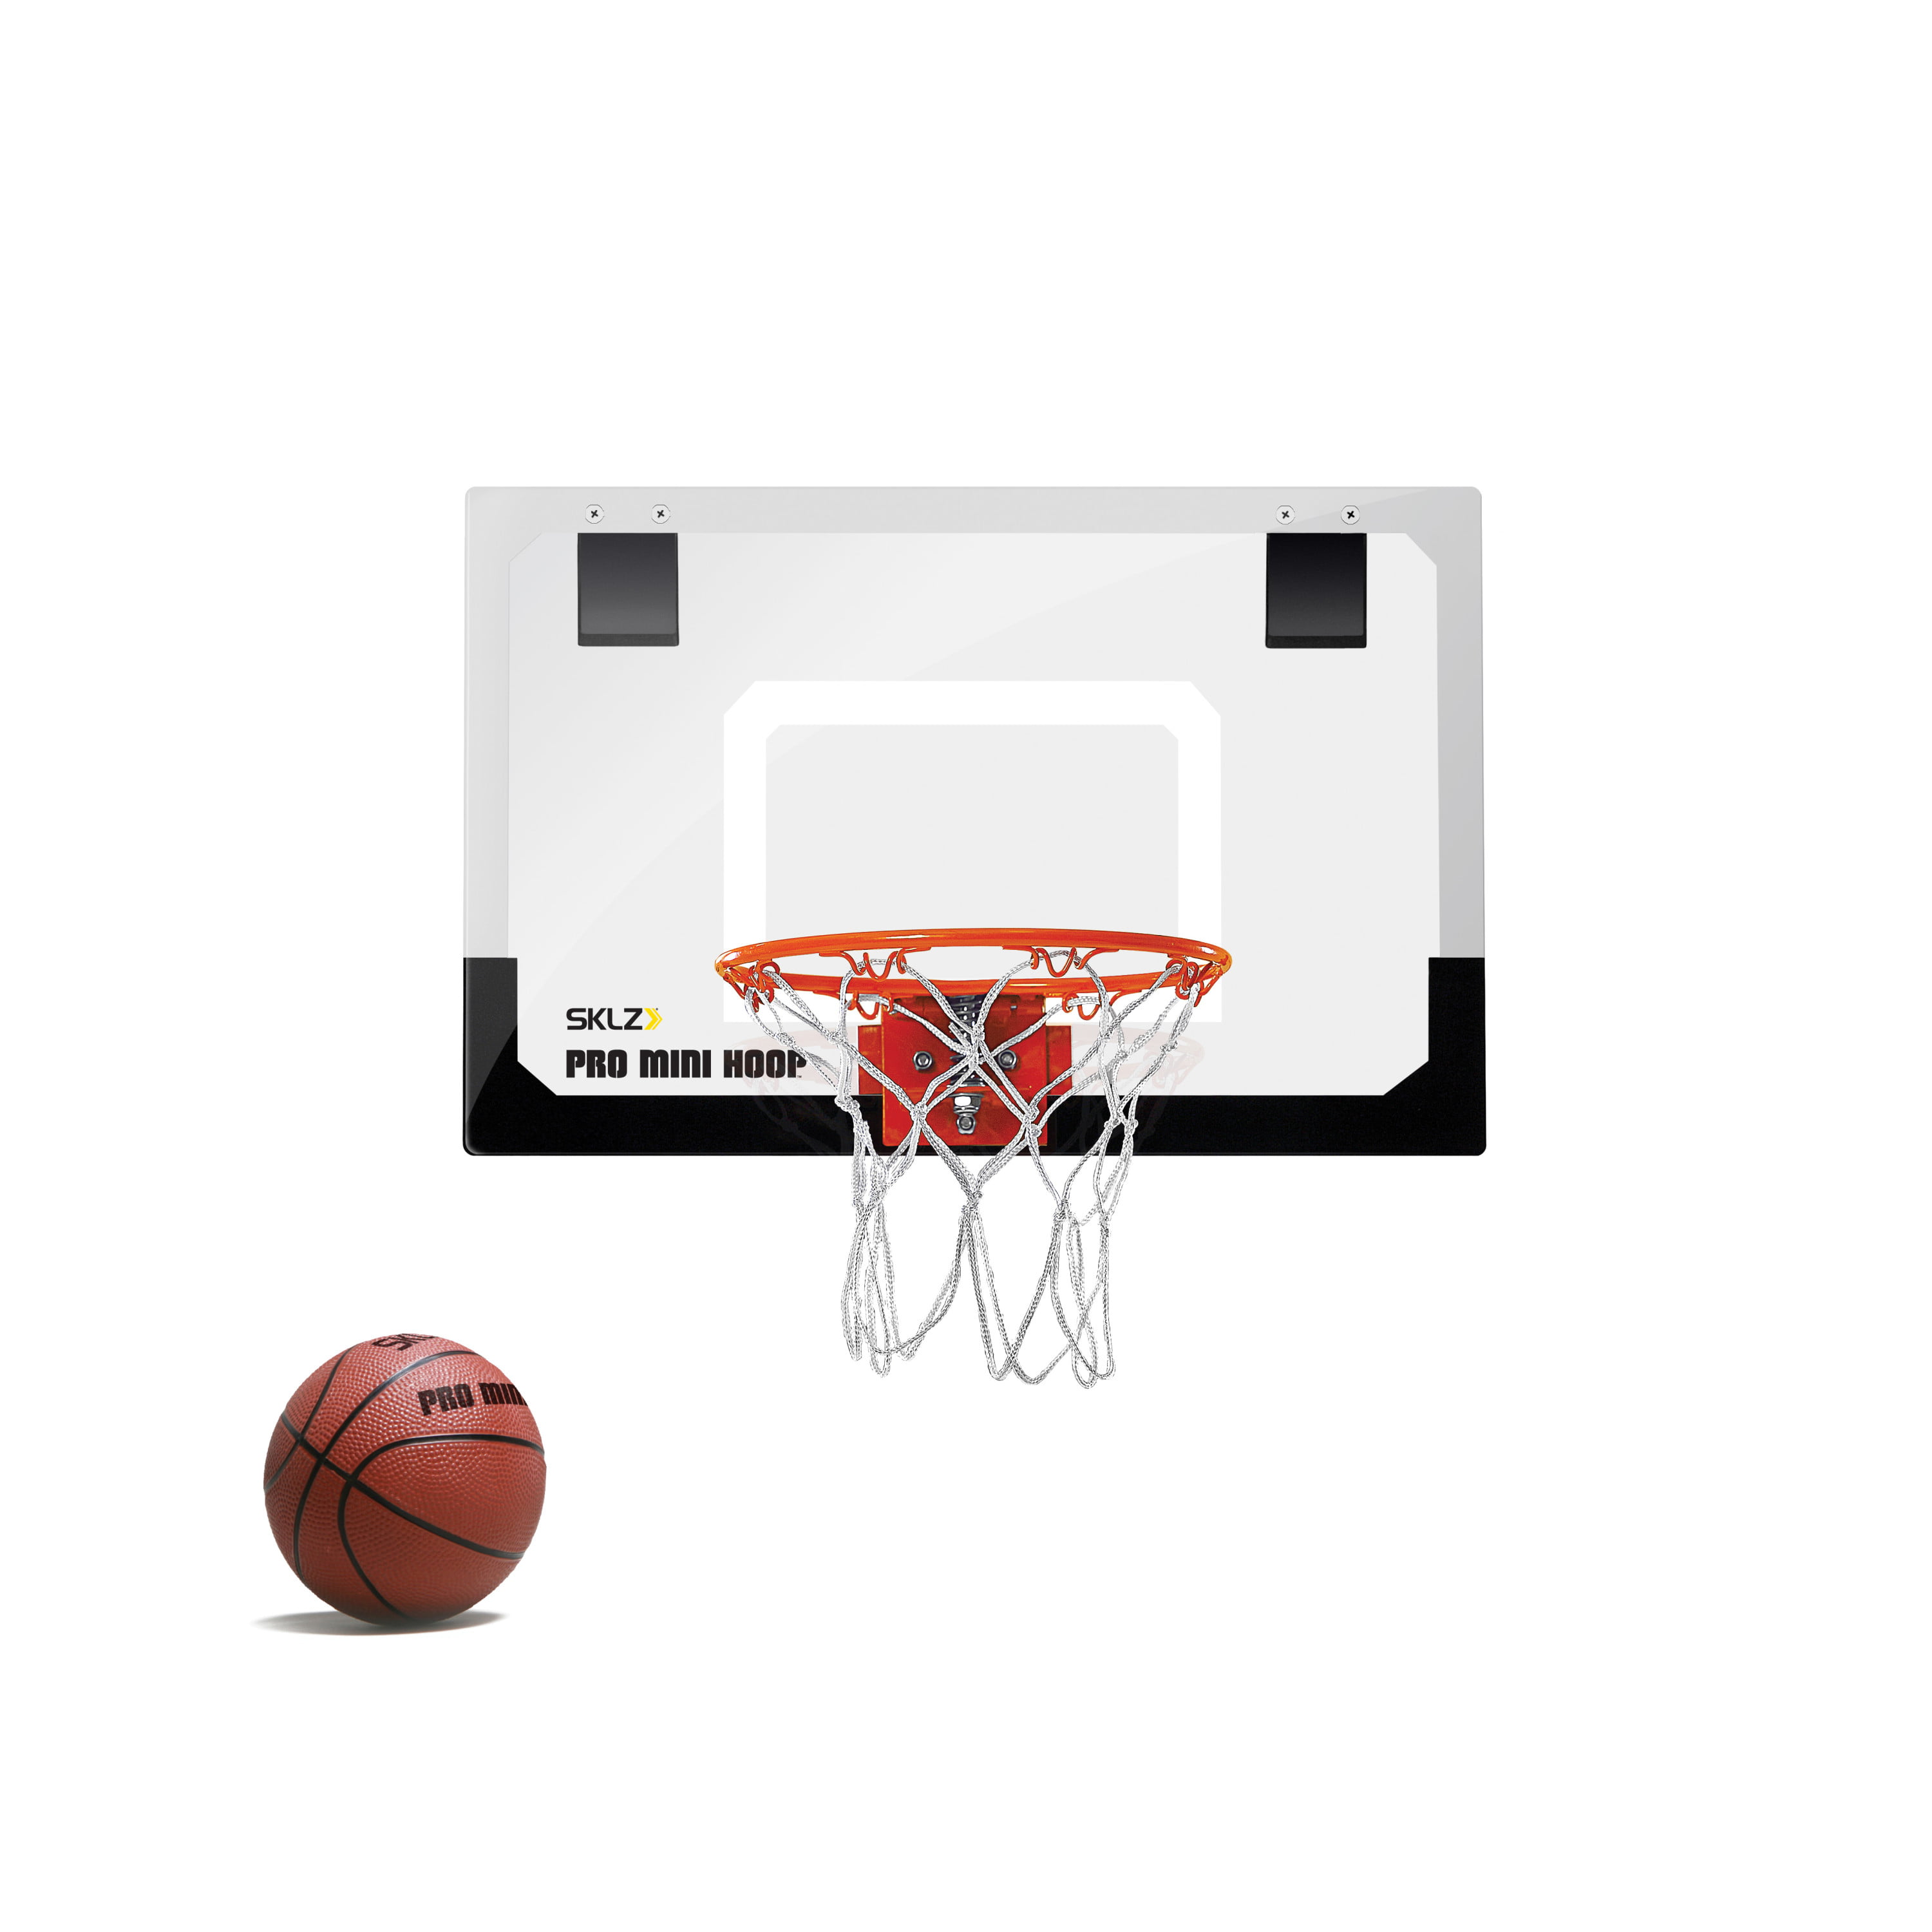 SKLZ Pro Mini Basketball Hoop with Ball, Original, Standard - 18 x 12 inches